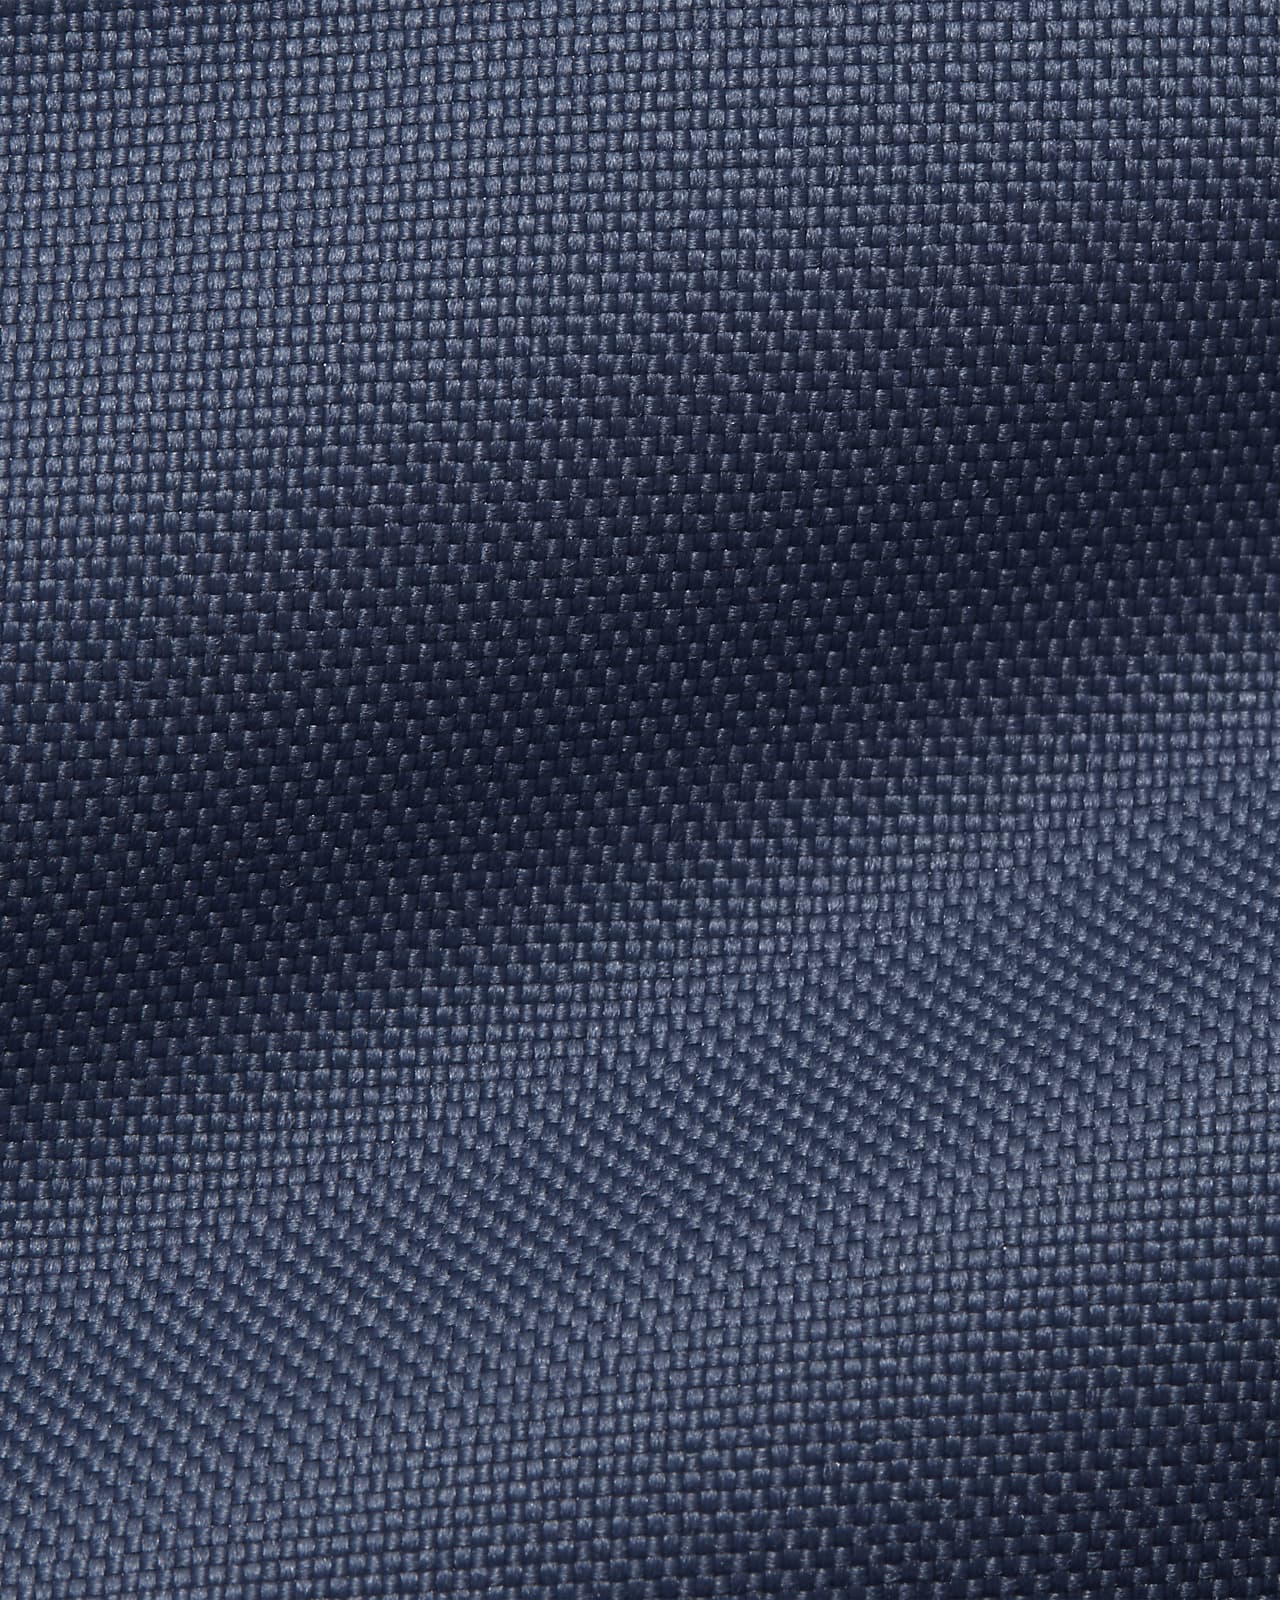 Shop Nike NSW Futura 365 Crossbody Bag CW9300-404 blue